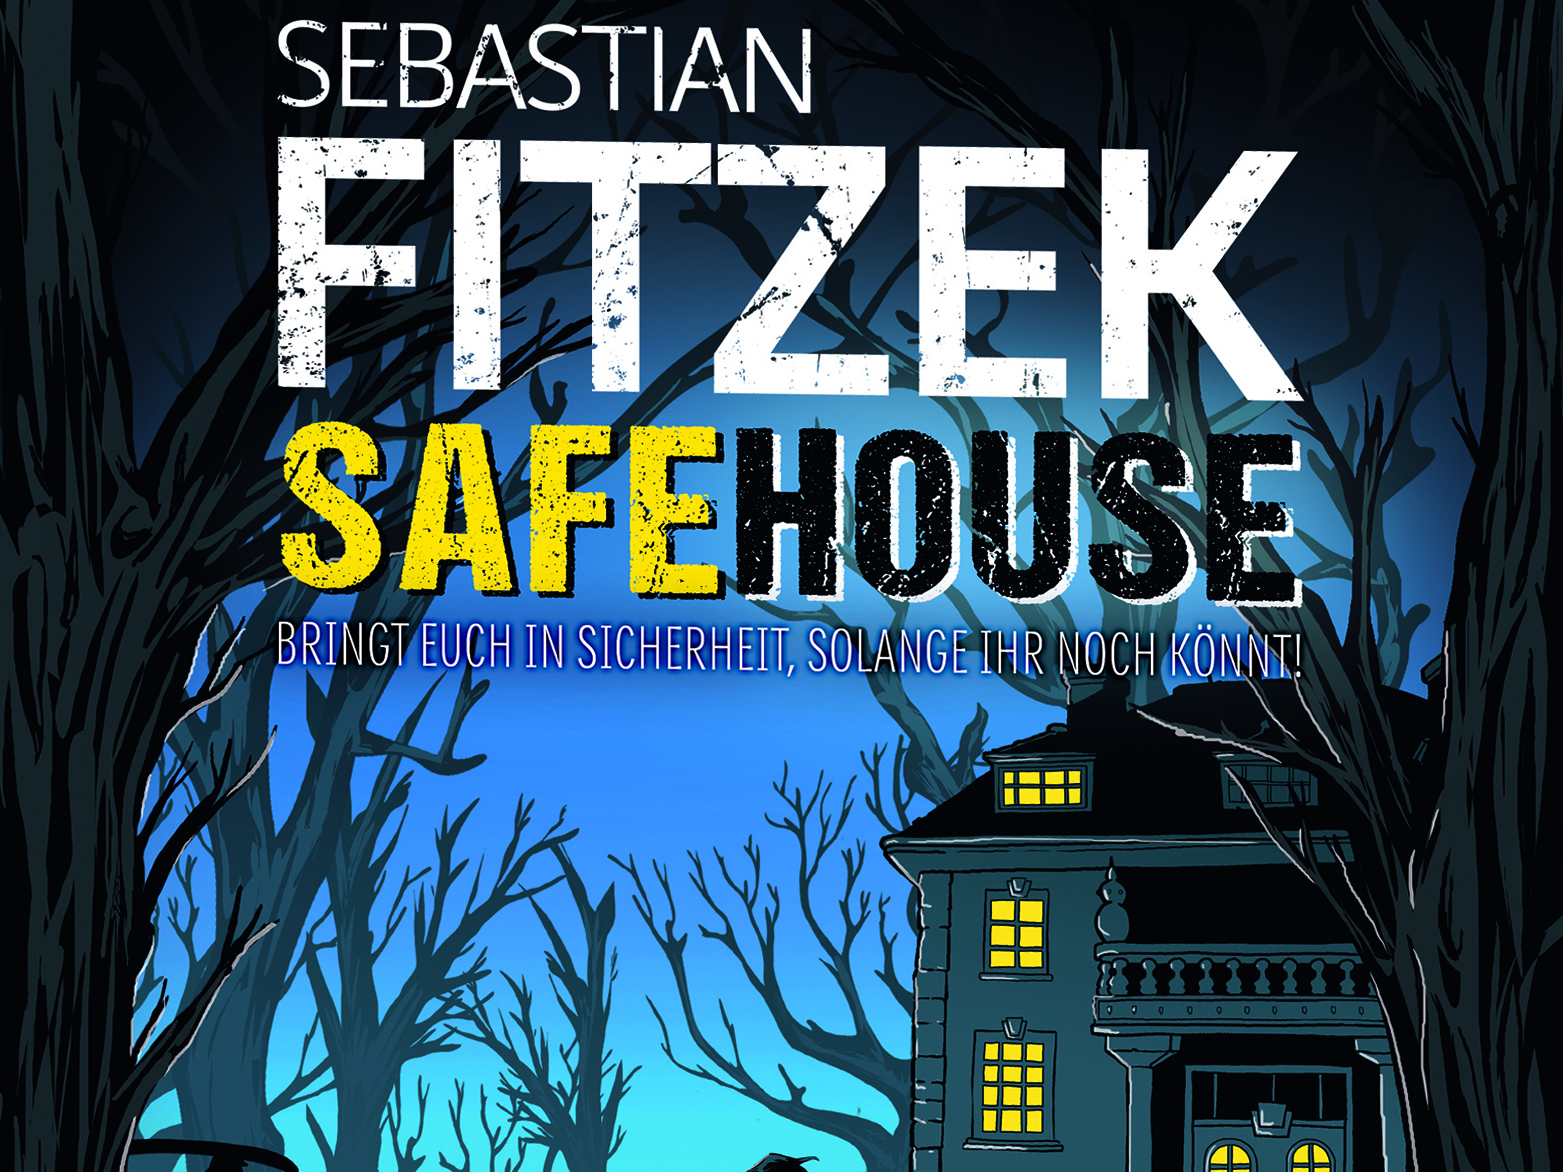 moses Das Würfelspiel Sebastian Fitzek Safehouse